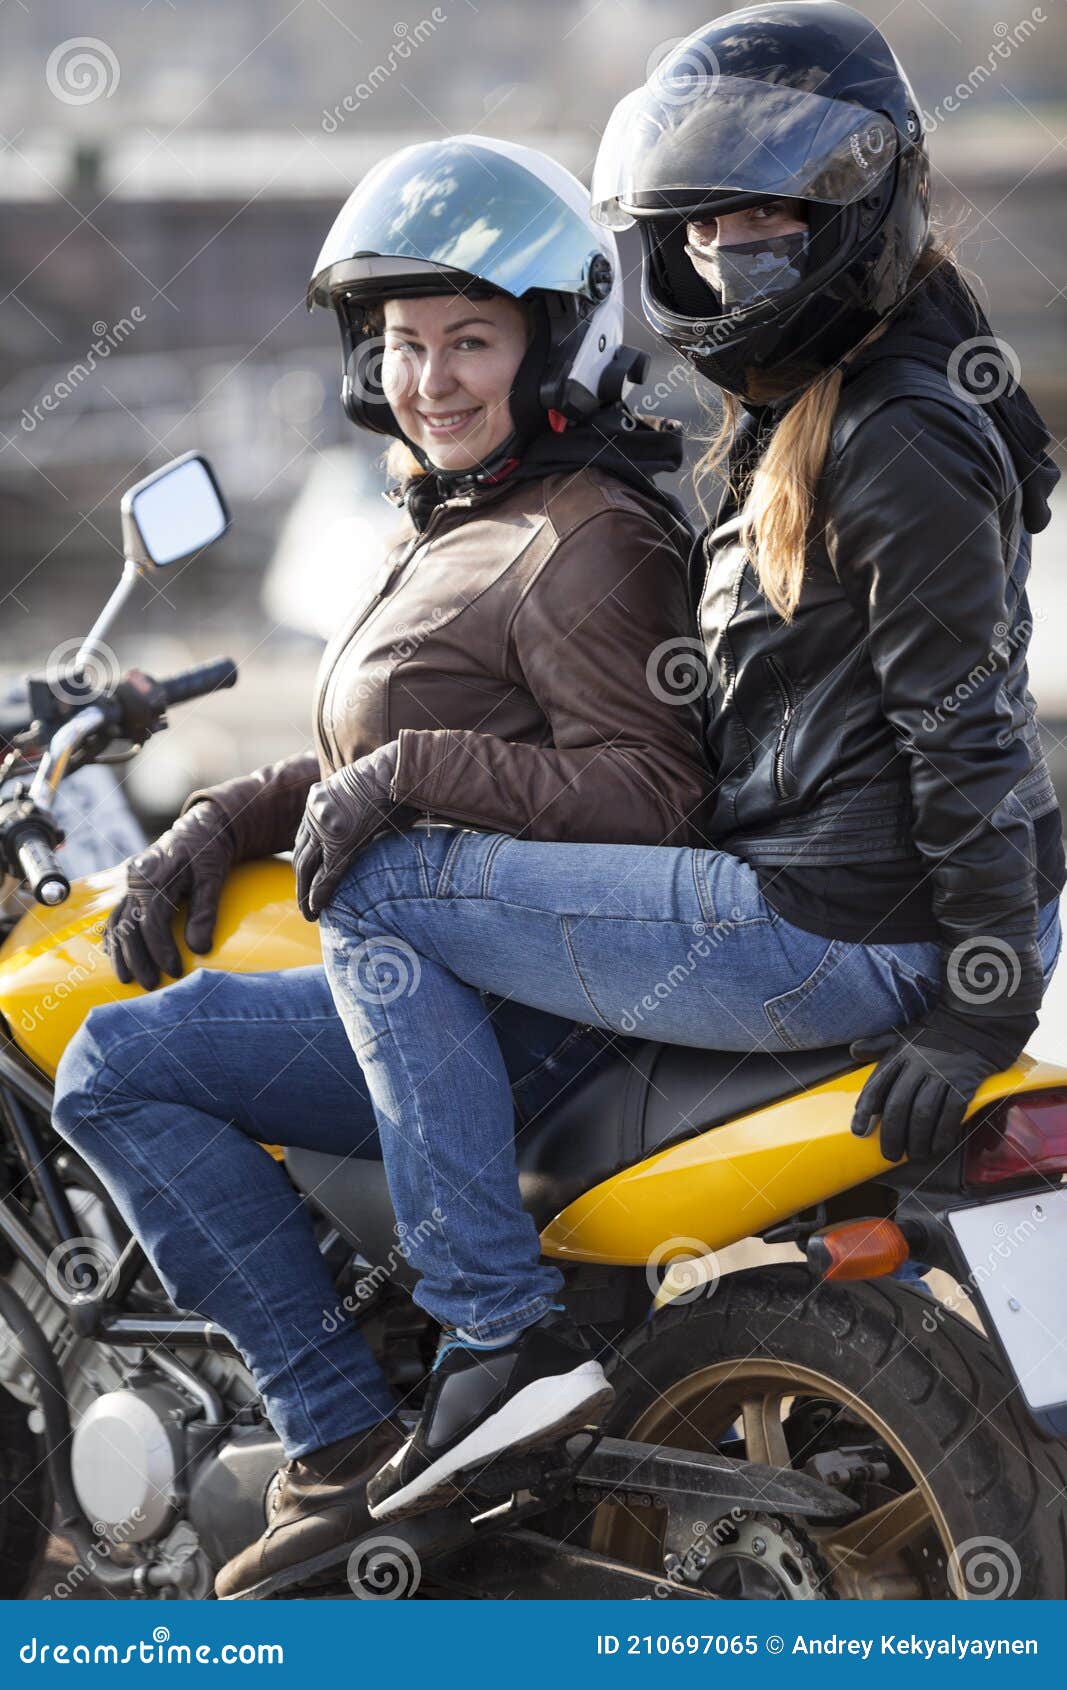 Girlfriend A Passenger Sitting Behind Female Motorcyclist